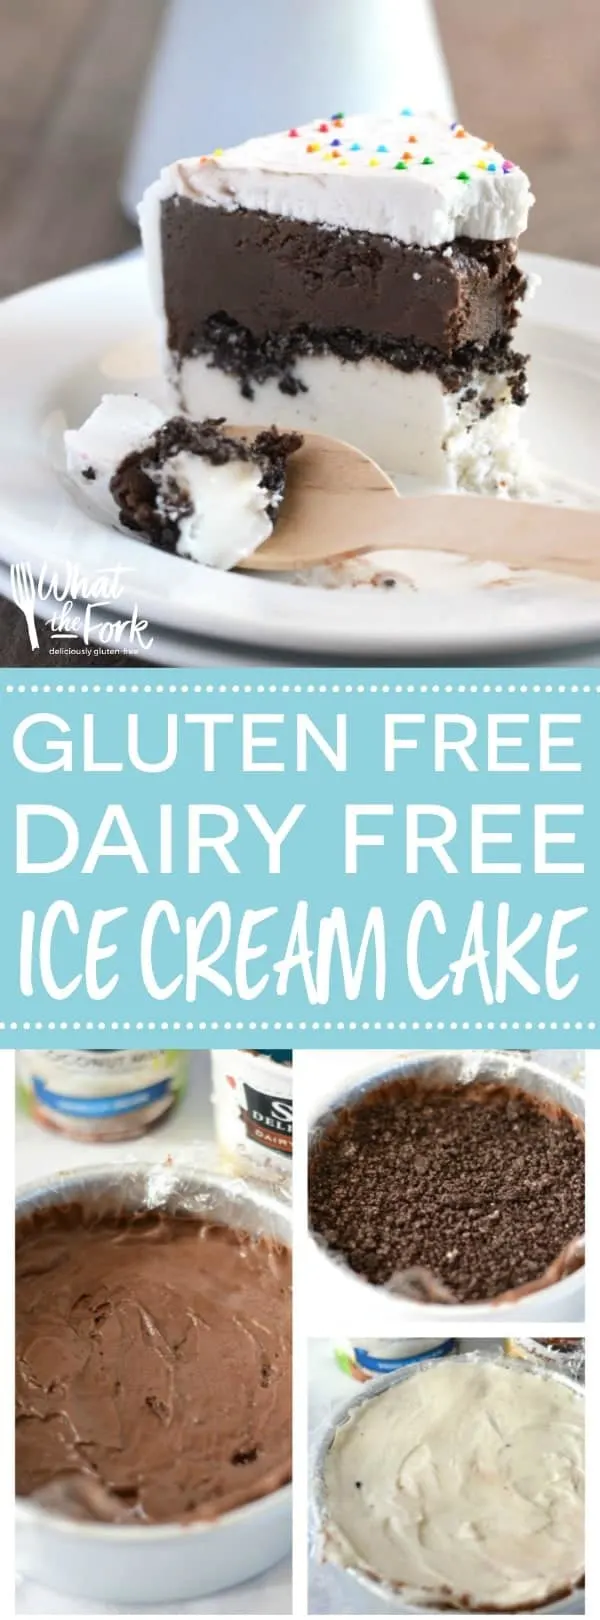 Gluten Free + Dairy Free Freezer Cake from @whattheforkblog | whattheforkfoodblog.com | Sponsored by So Delicious | ice cream cake recipes | homemade ice cream cake | dairy free ice cream cake | gluten free ice cream cake recipes | no-bake dessert recipes | easy gluten free dessert recipes |